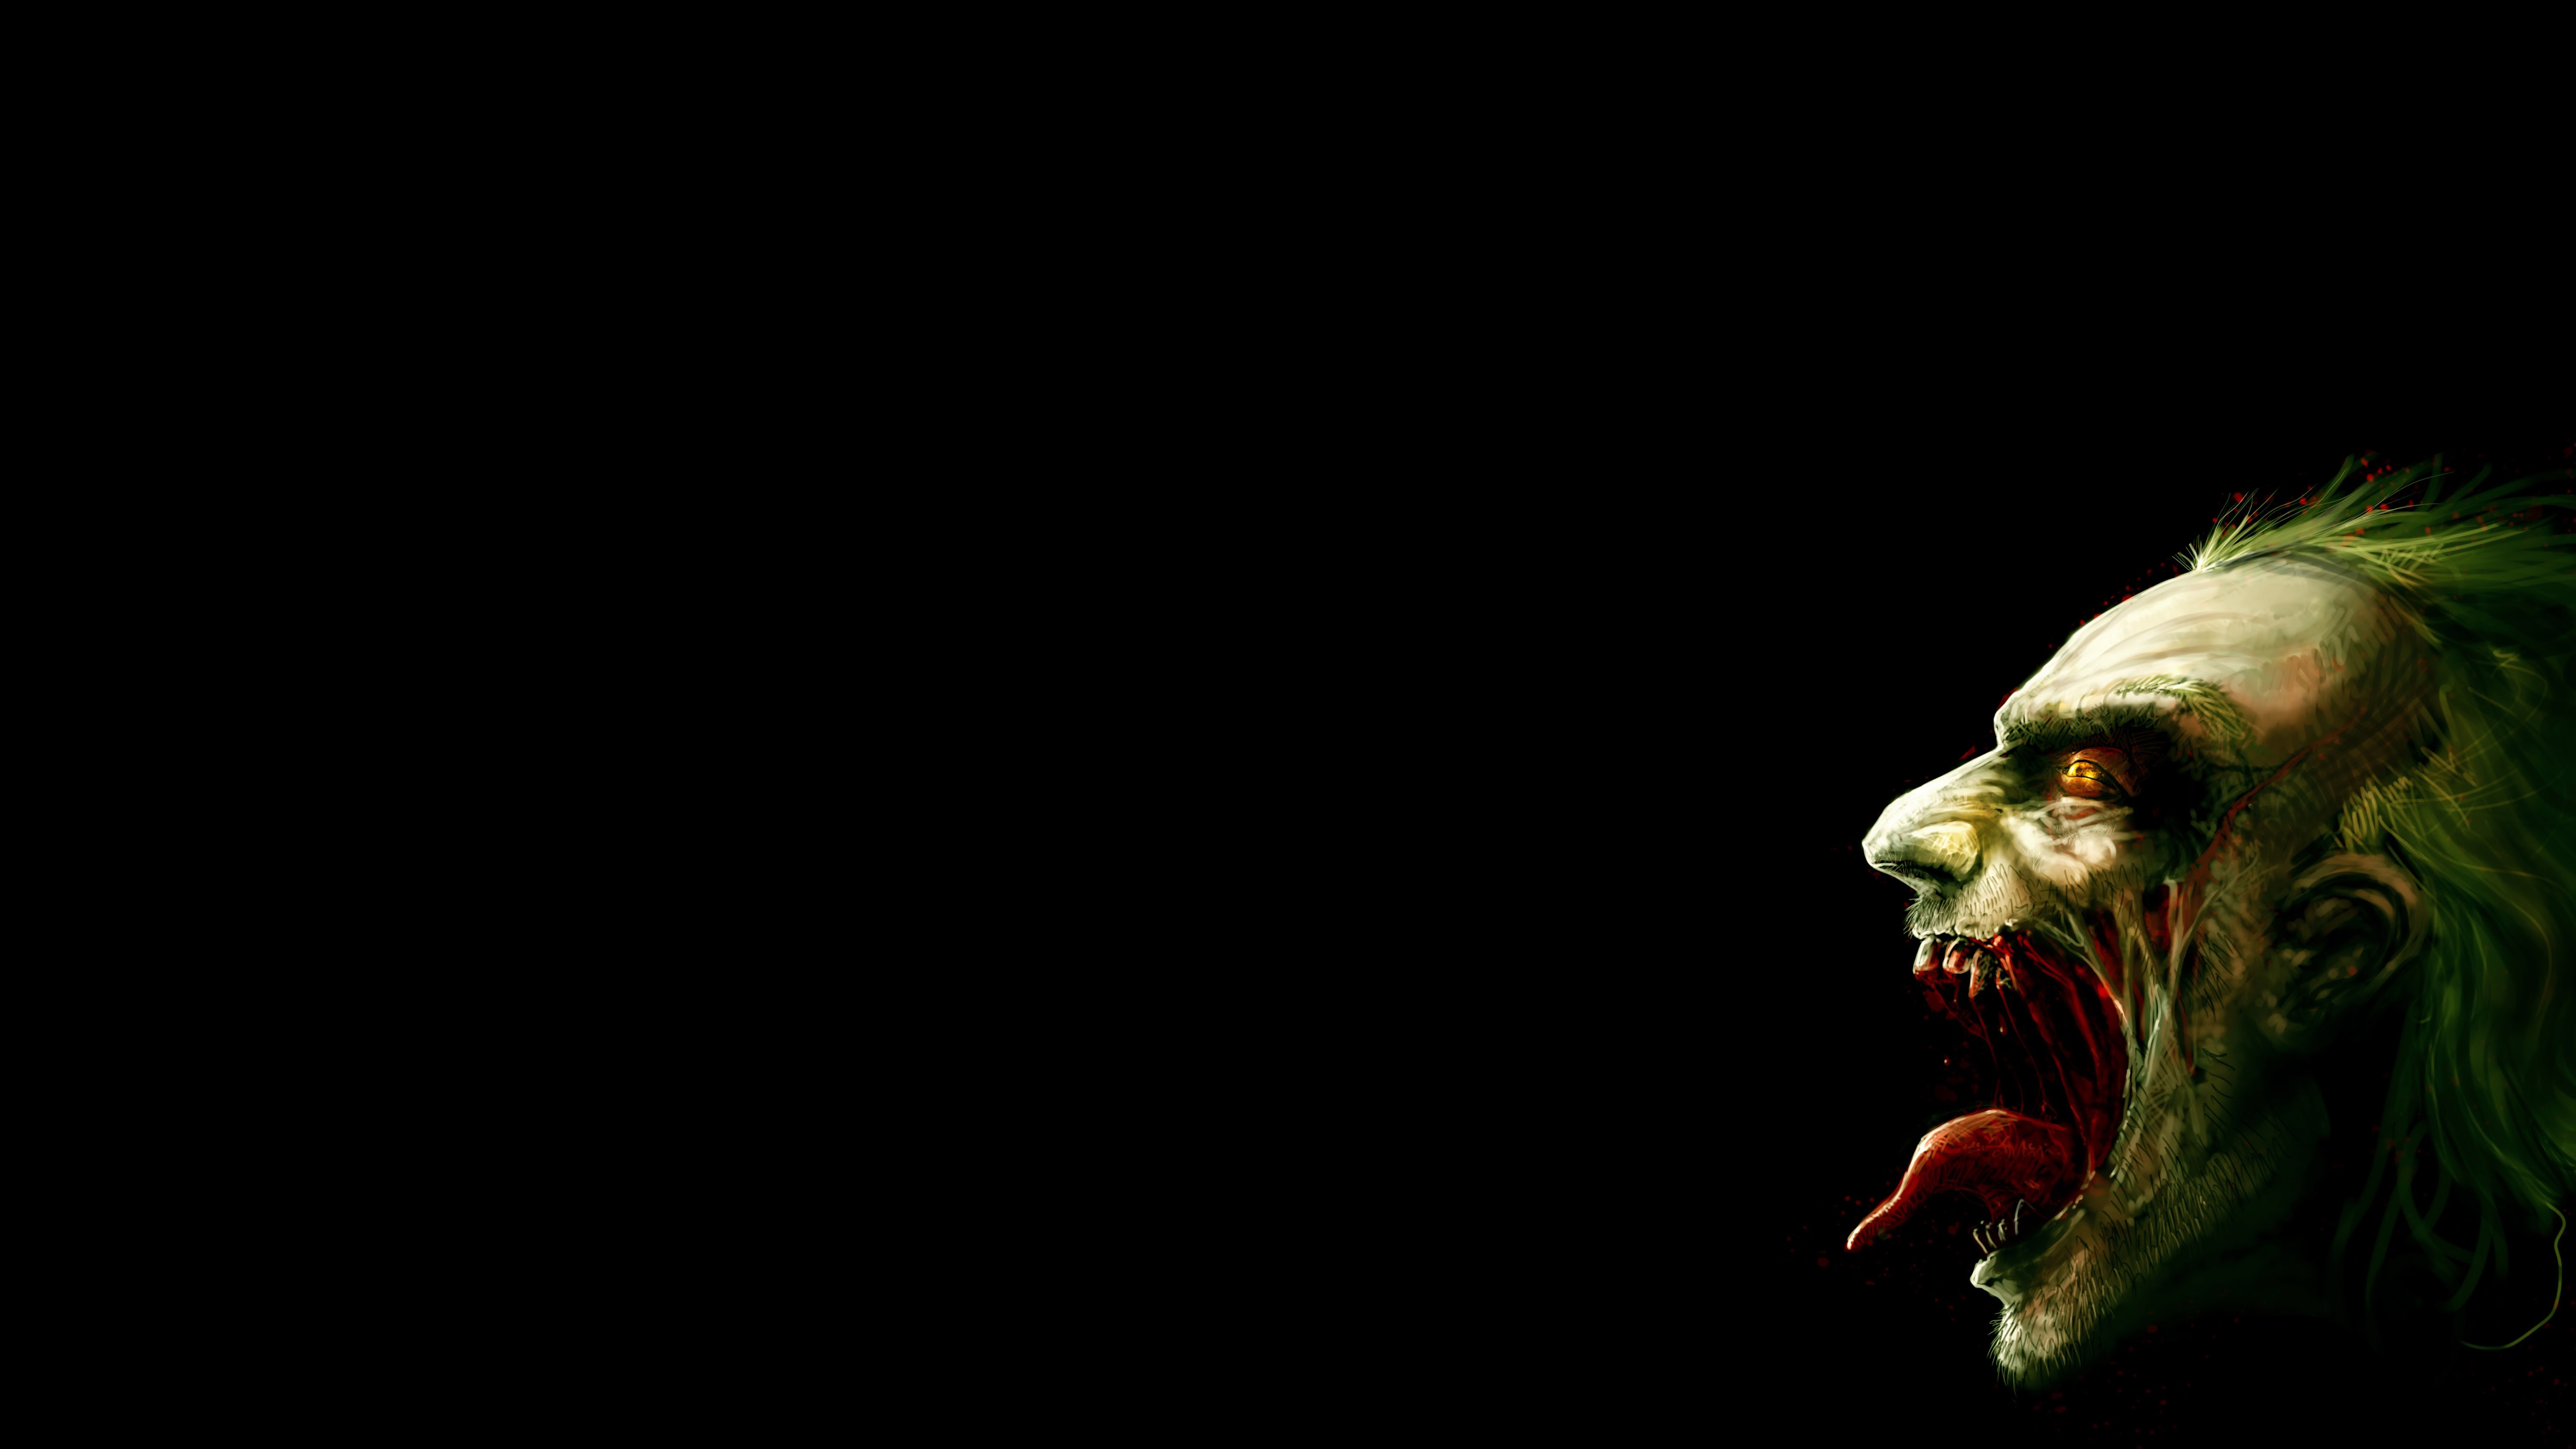 Joker 5k Retina Ultra HD Wallpaper And Background